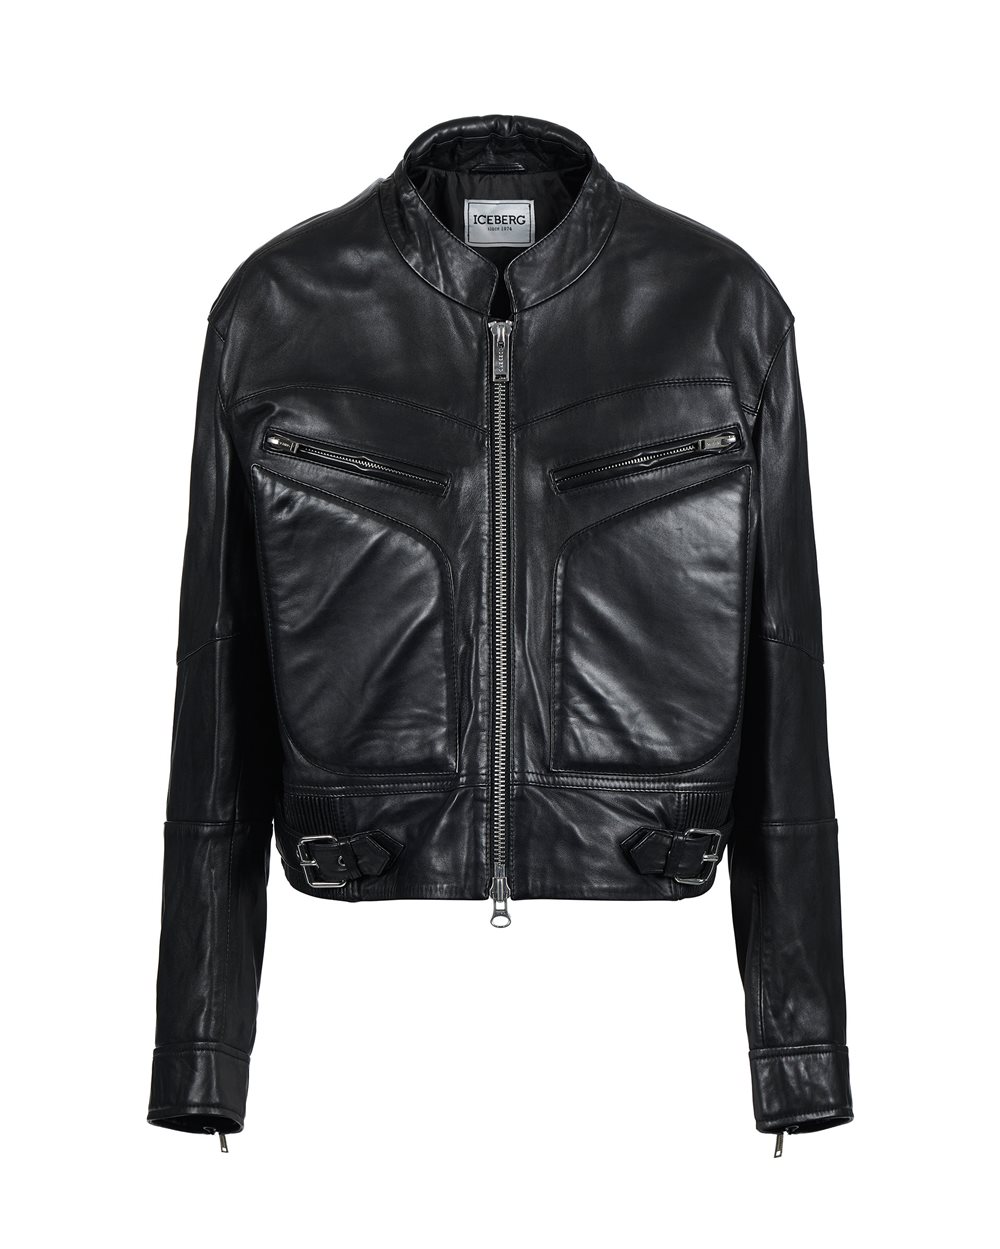 Biker jacket with logo - VALENTINE'S DAY GIFTS | Iceberg - Official Website